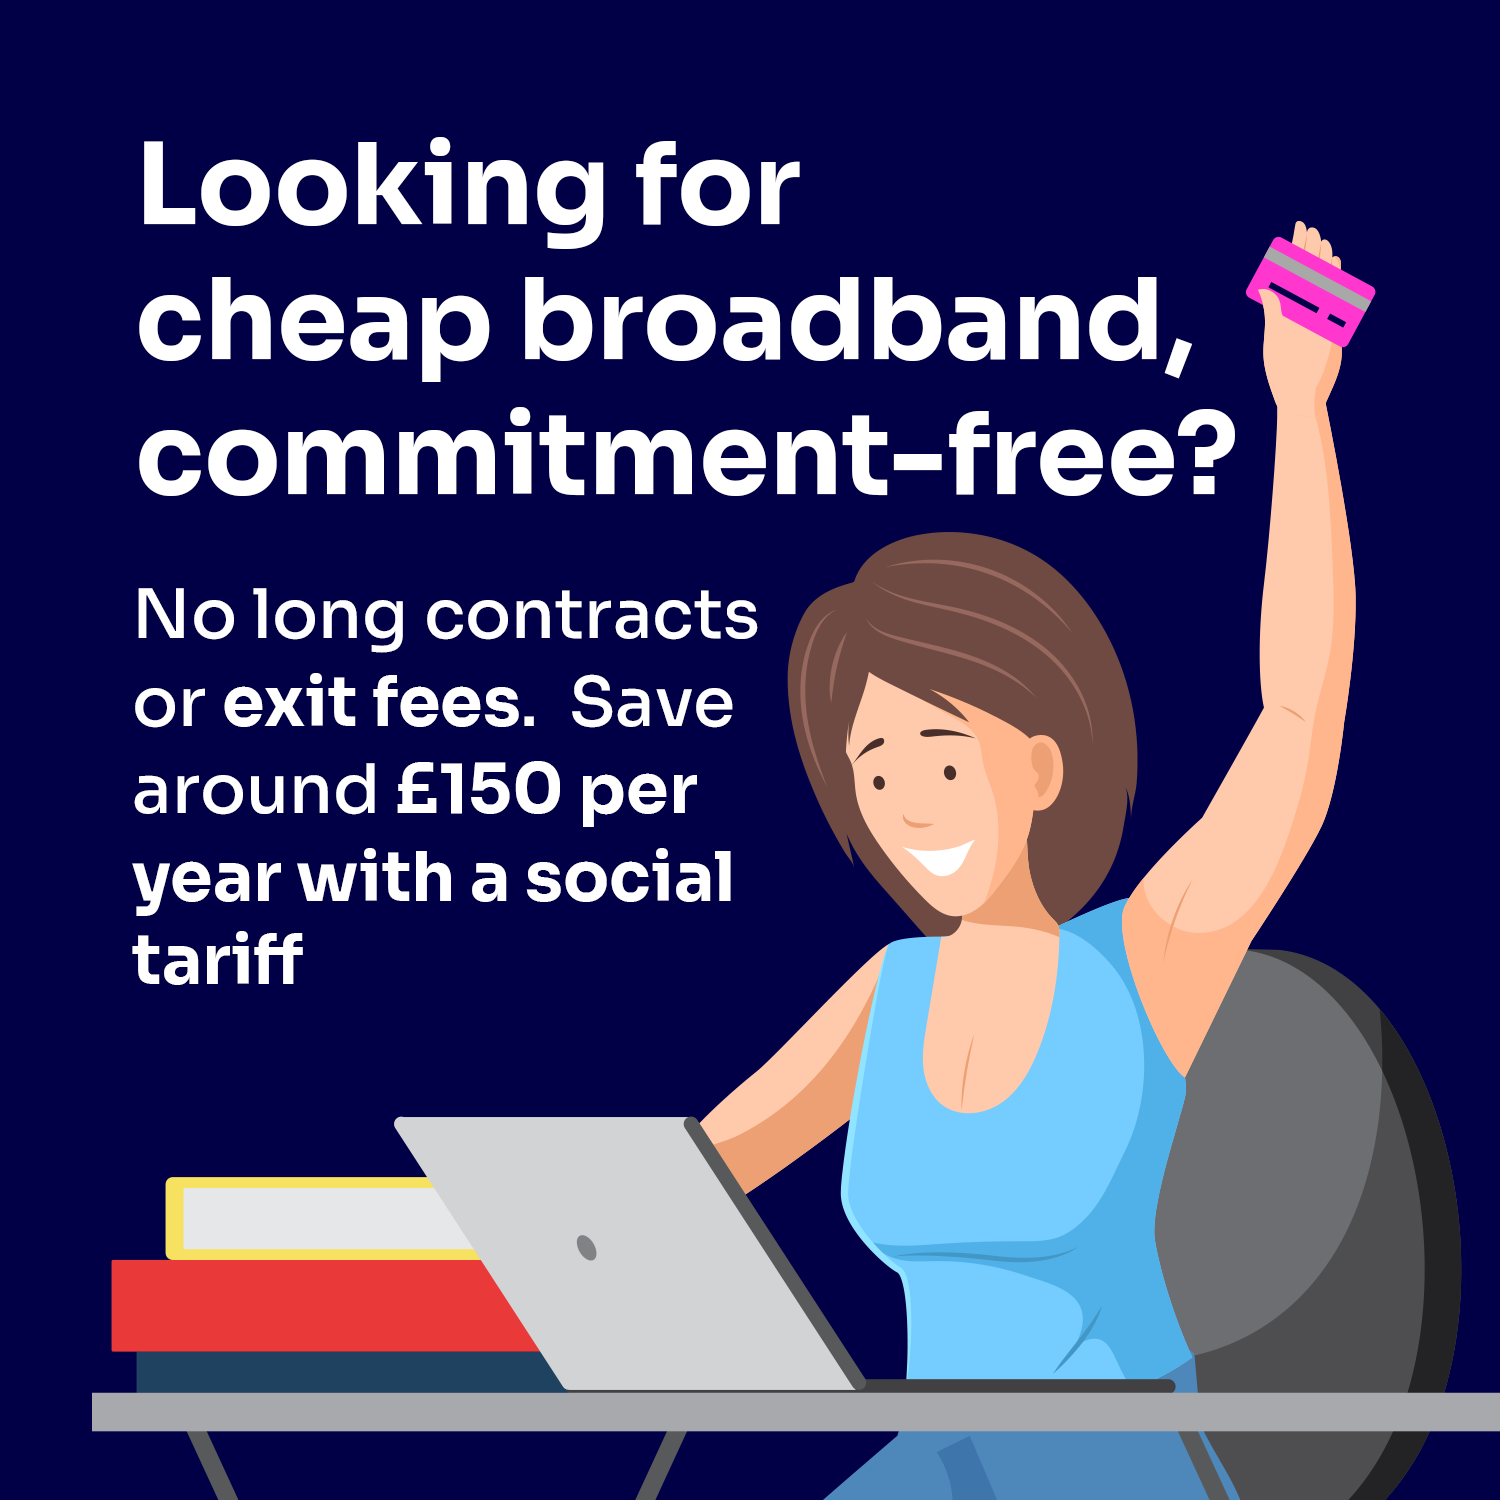 Cheap broadband commitment-free